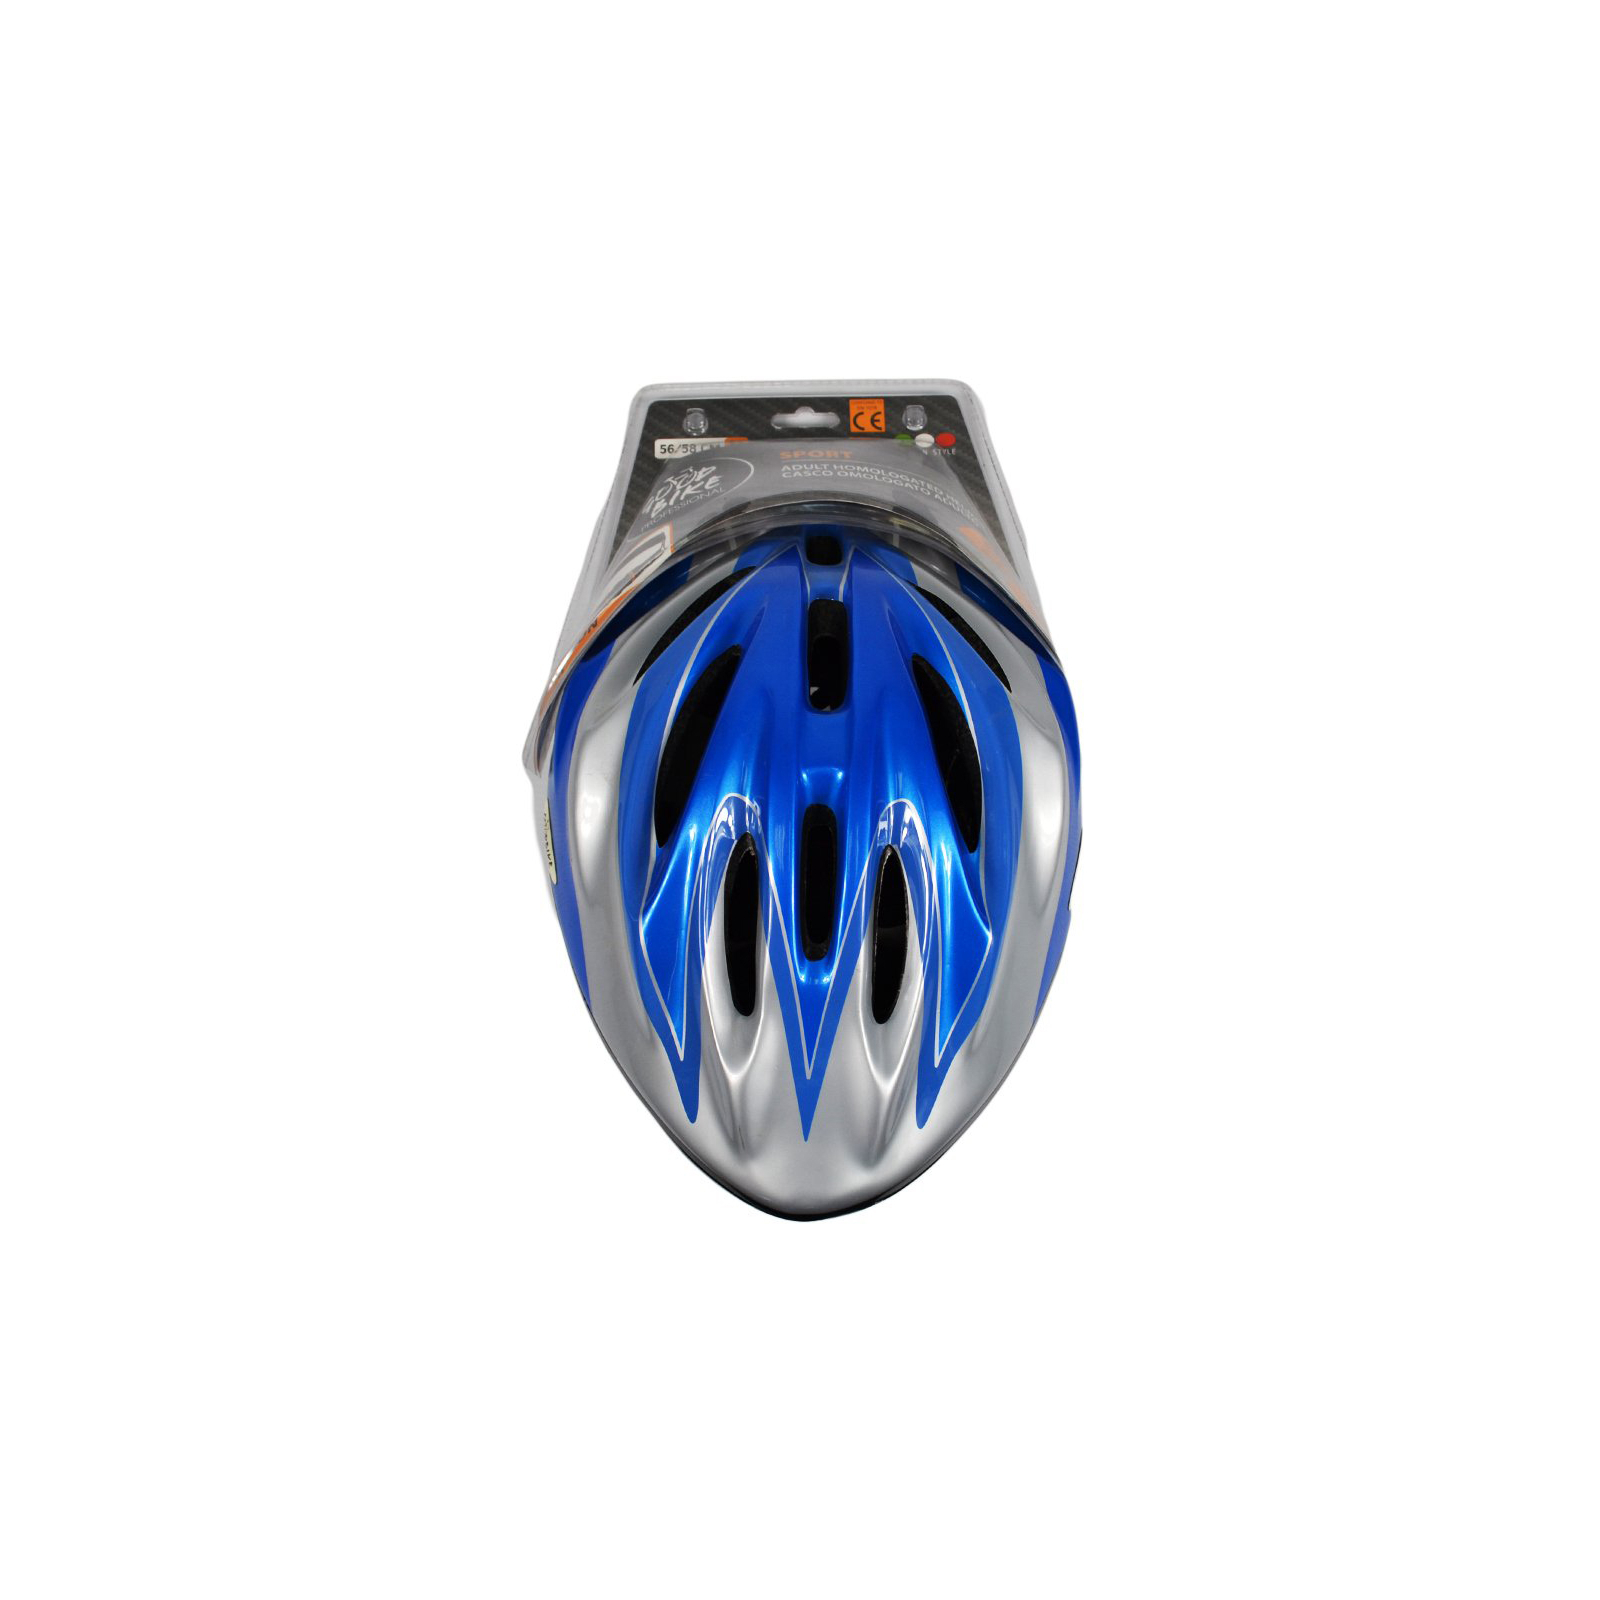 Шлем Good Bike M 56-58 см Blue/Black (88854/8-IS) изображение 8